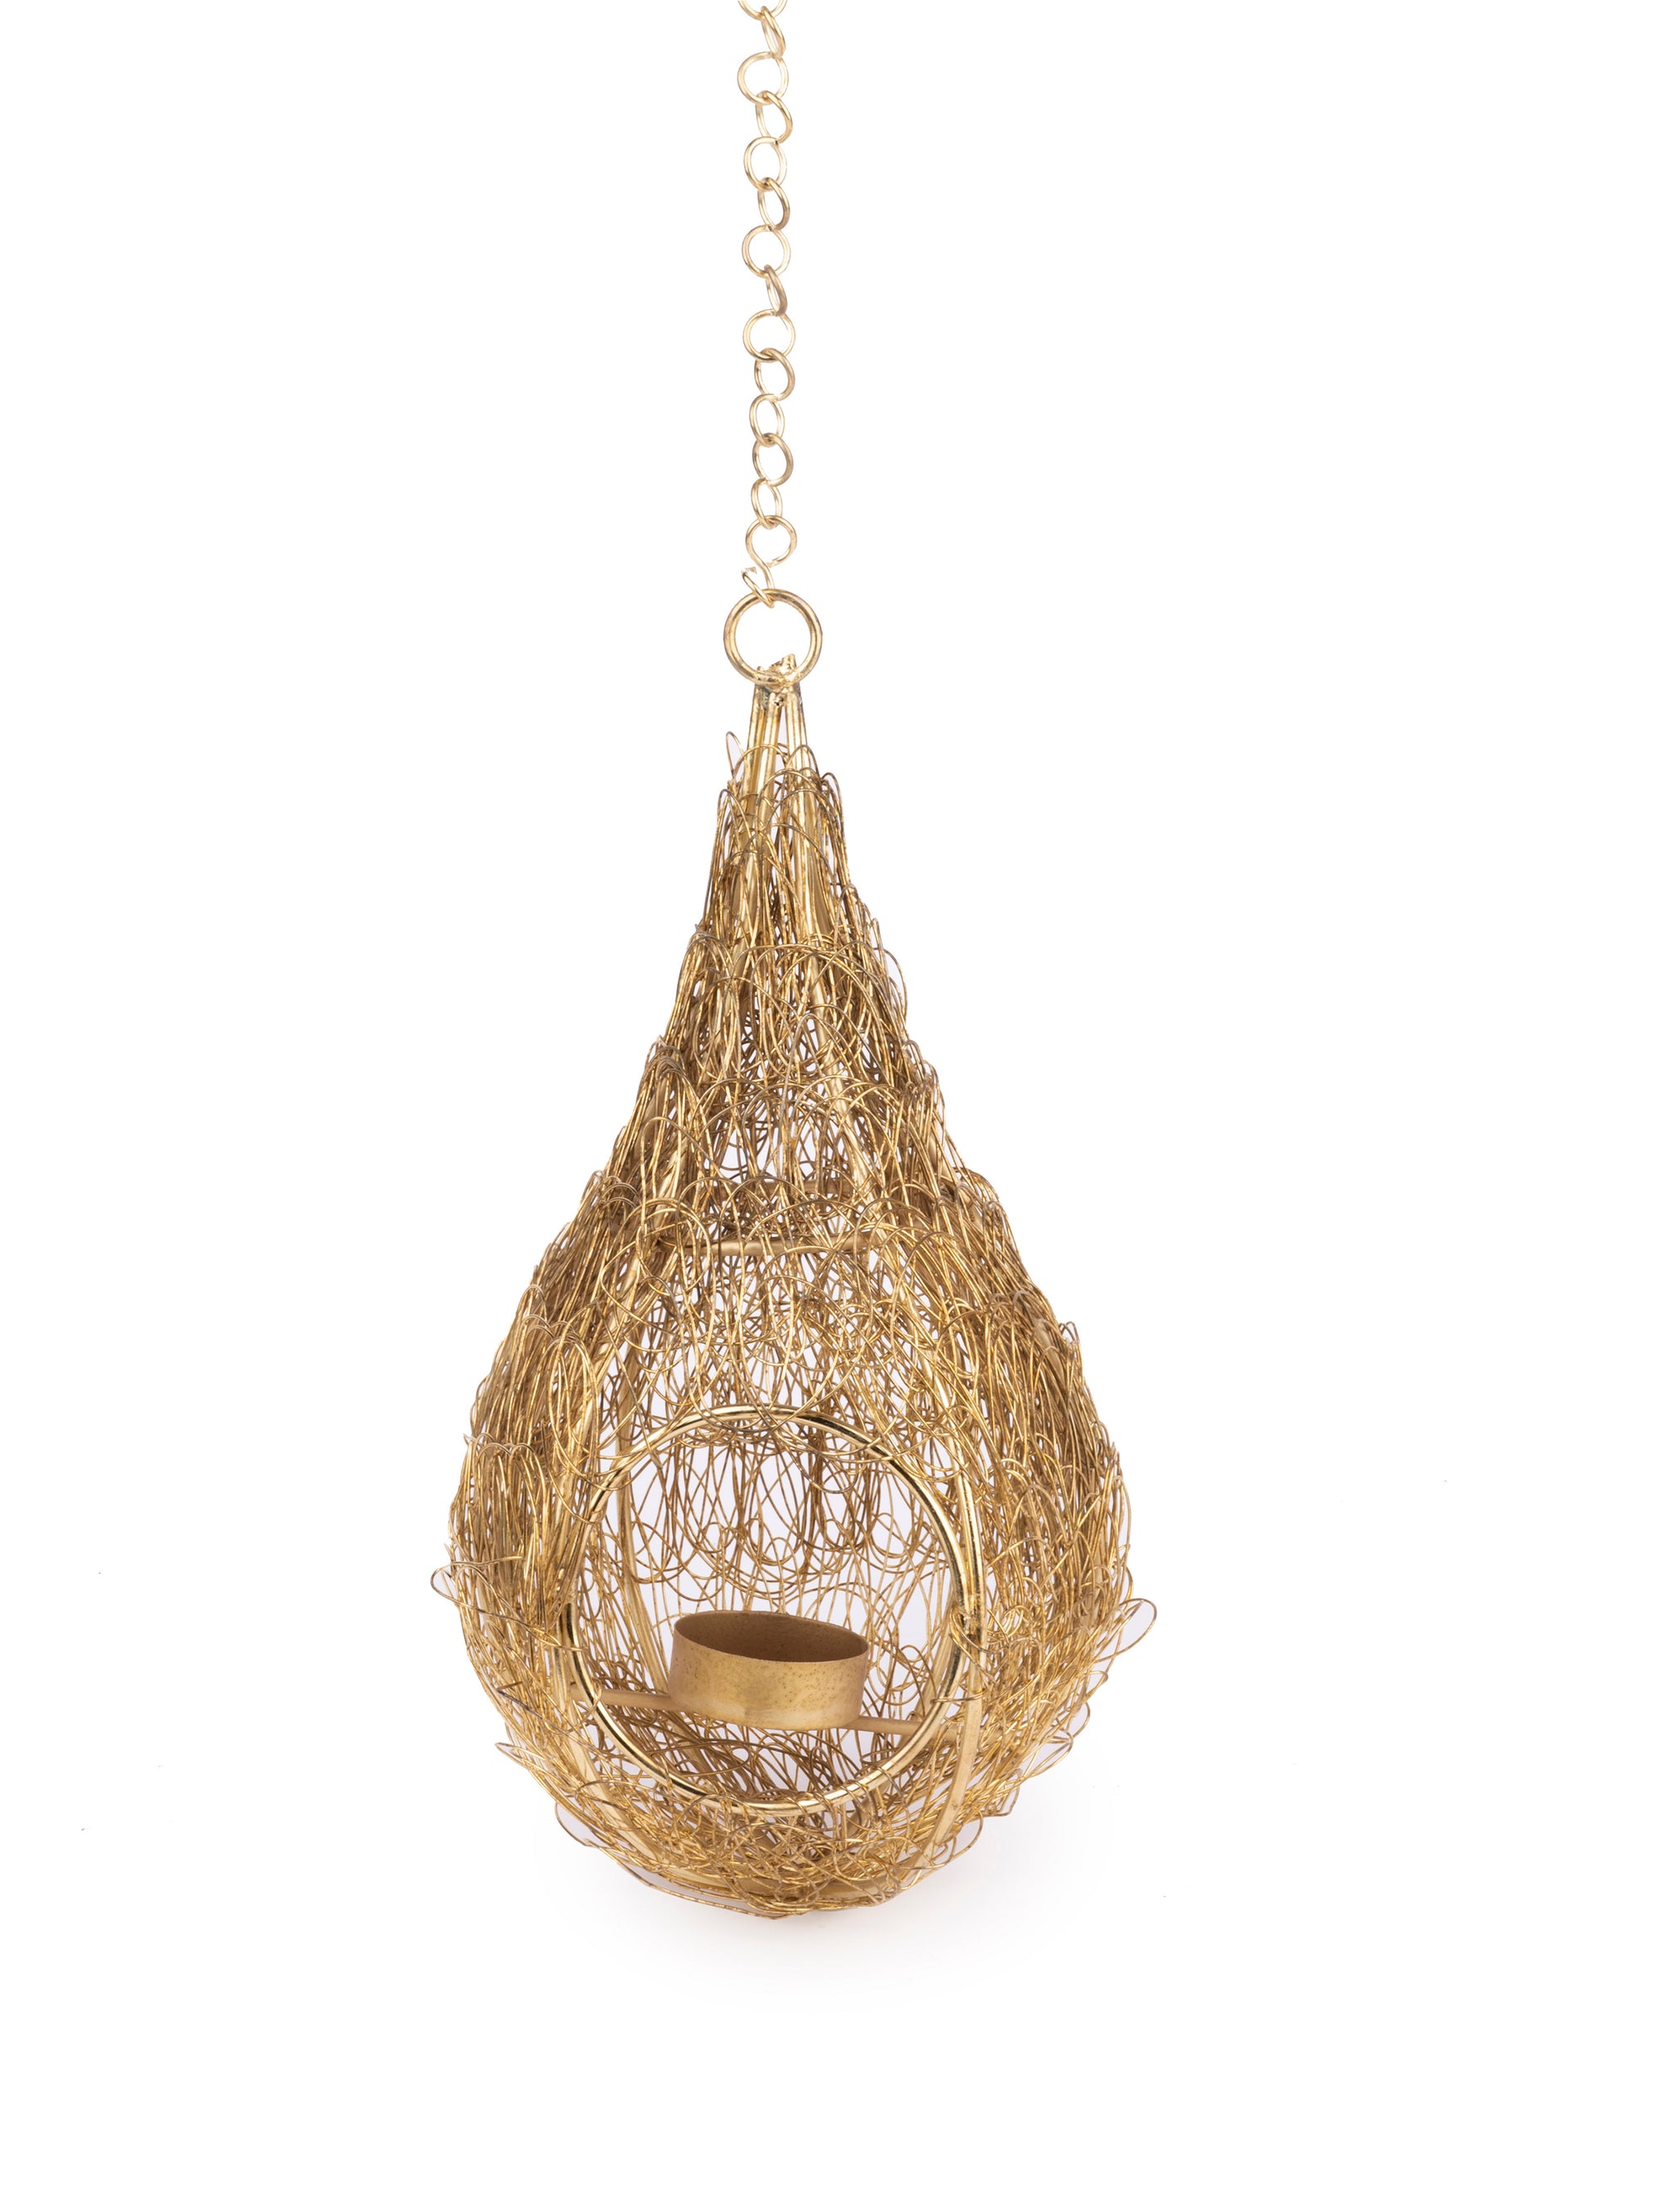 Hanging Bird Nest Lantern / Tea light Holder in Gold color - The Heritage Artifacts